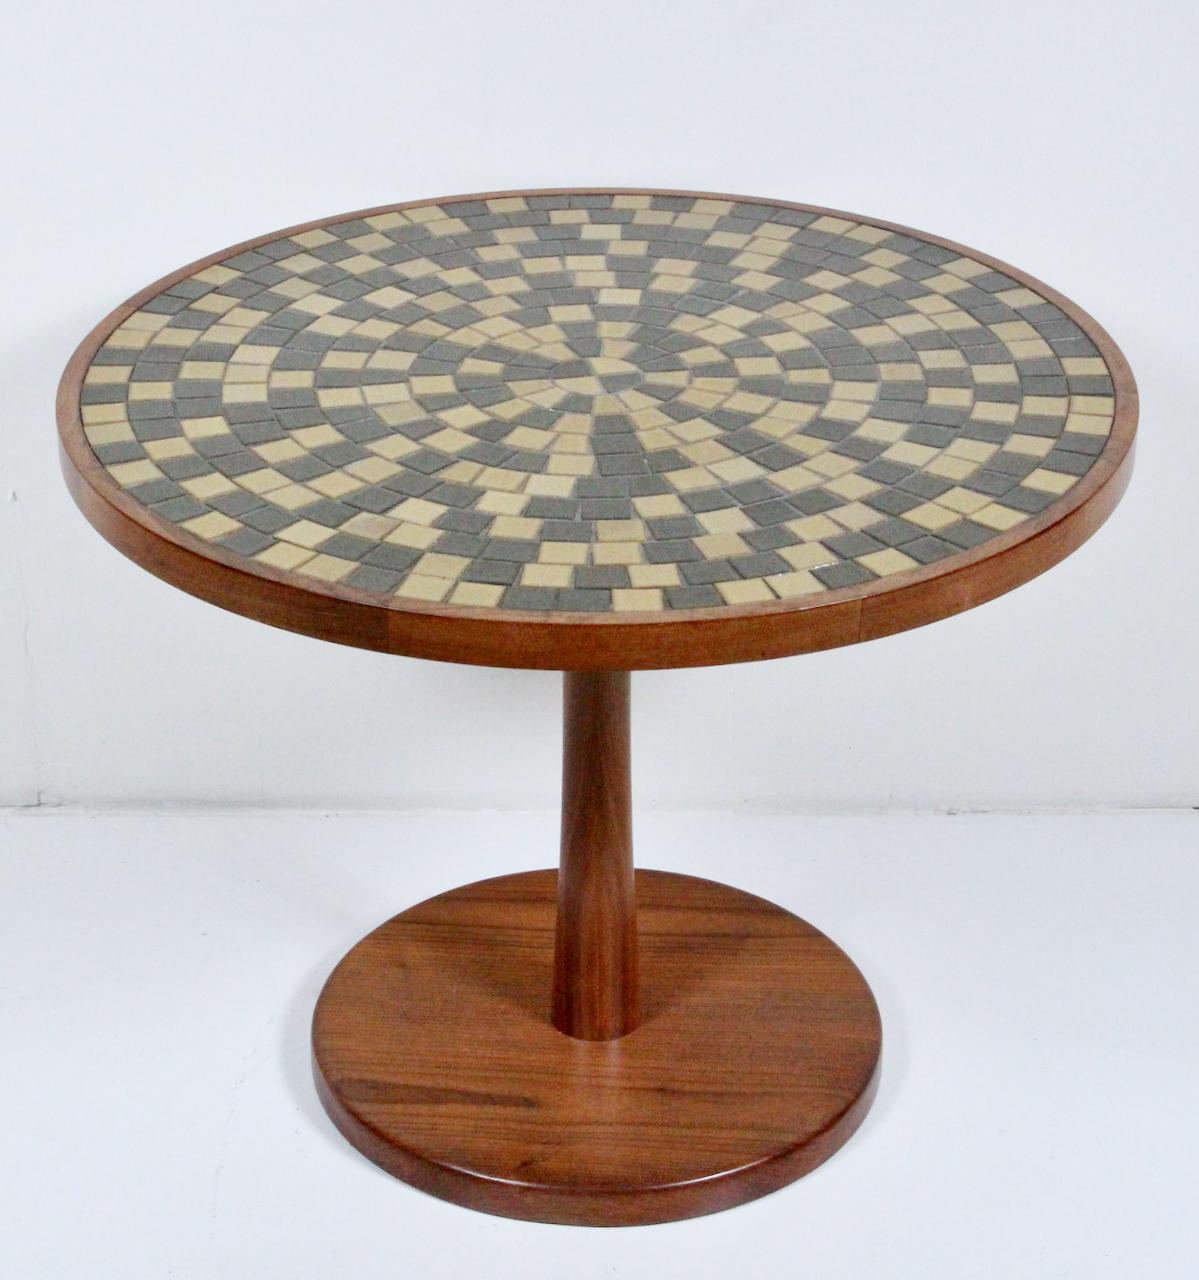 American Gordon & Jane Martz for Marshall Studios Walnut and Tile Pedestal Table, C. 1960